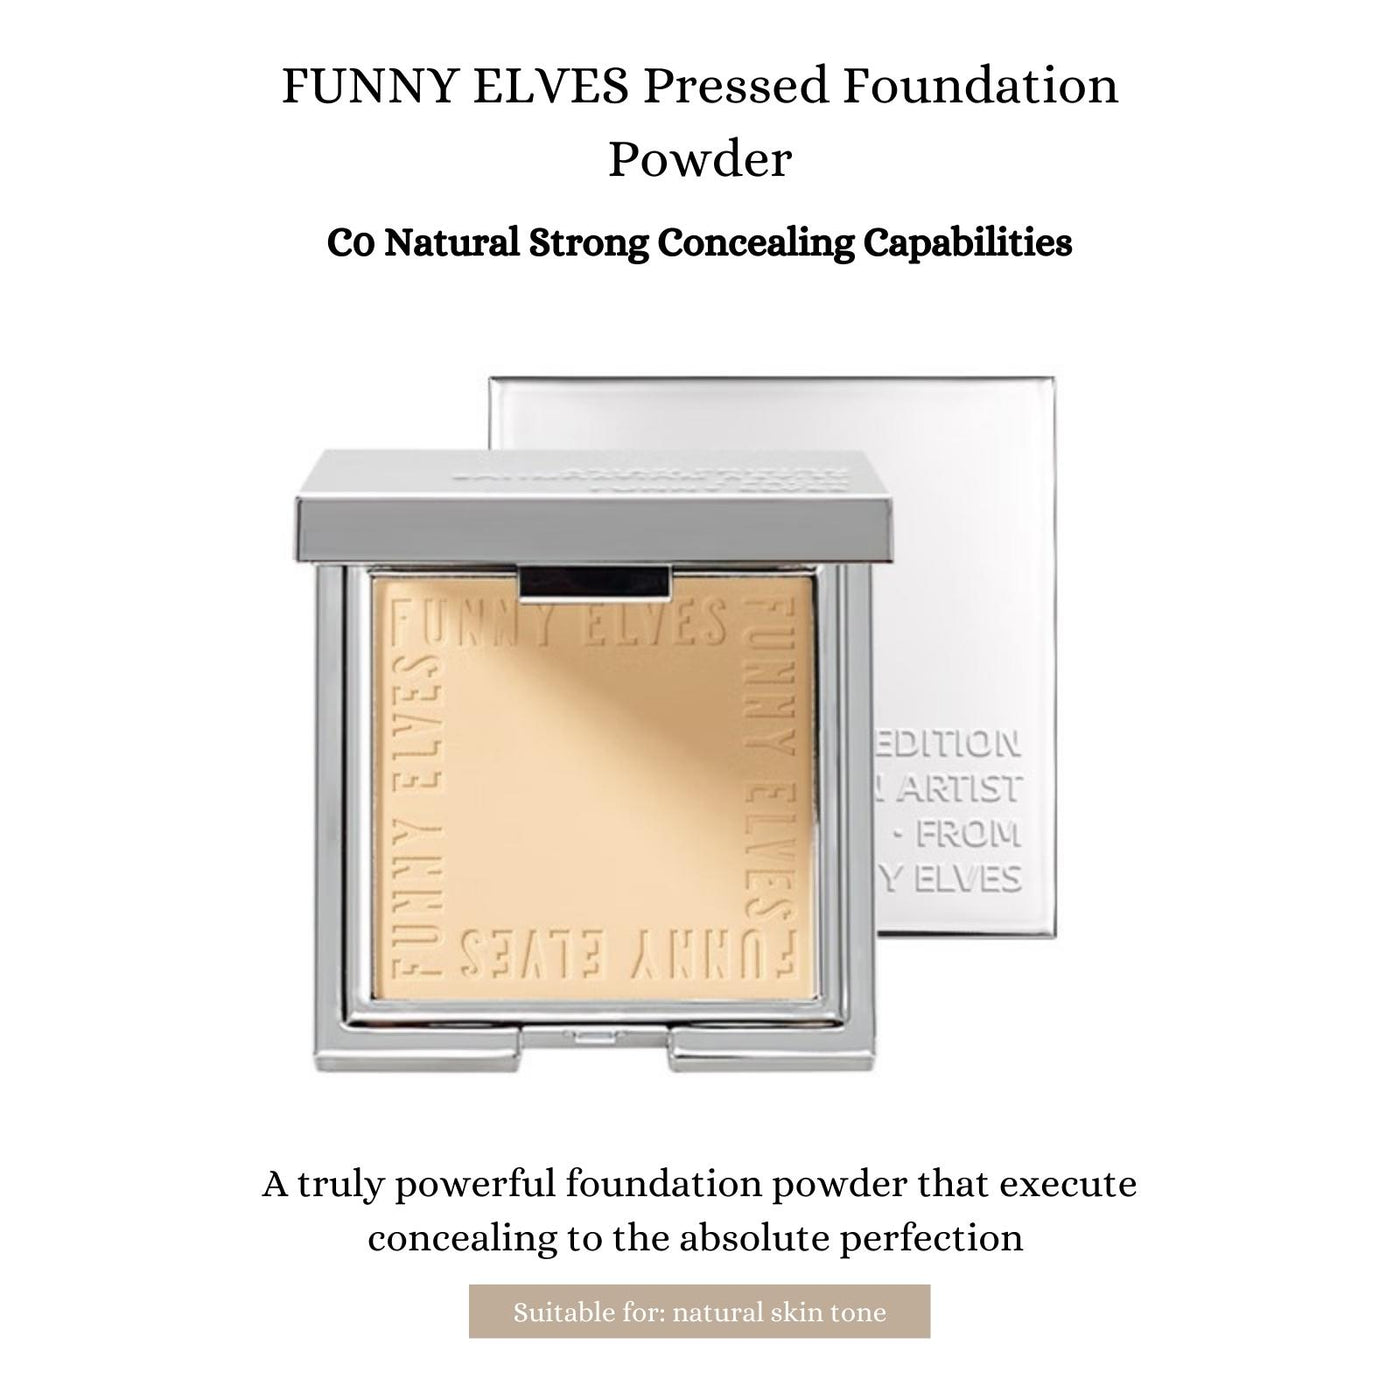 FUNNY ELVES Pressed Foundation Powder